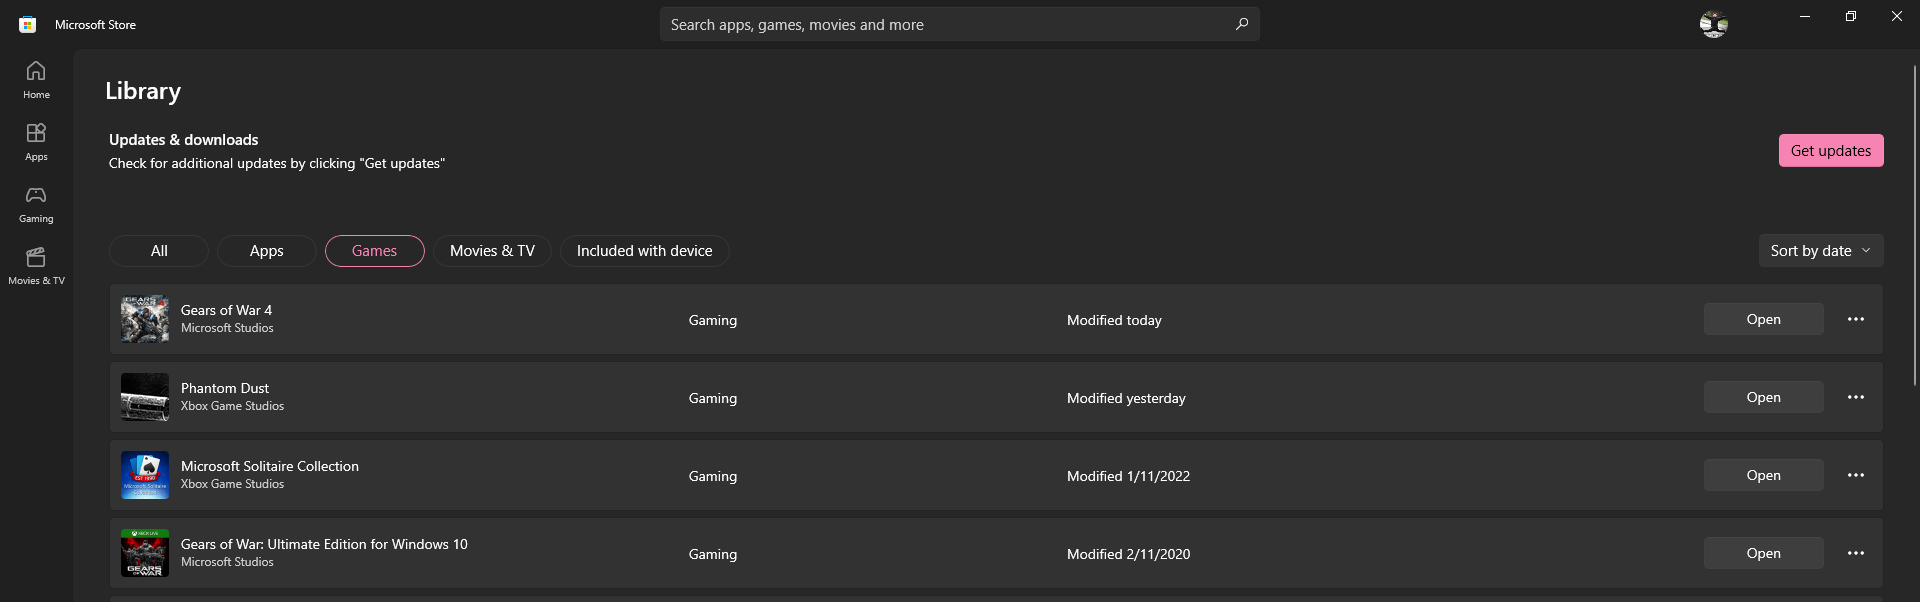 Na surdina: Gears of War Ultimate Edition chega ao Windows 10